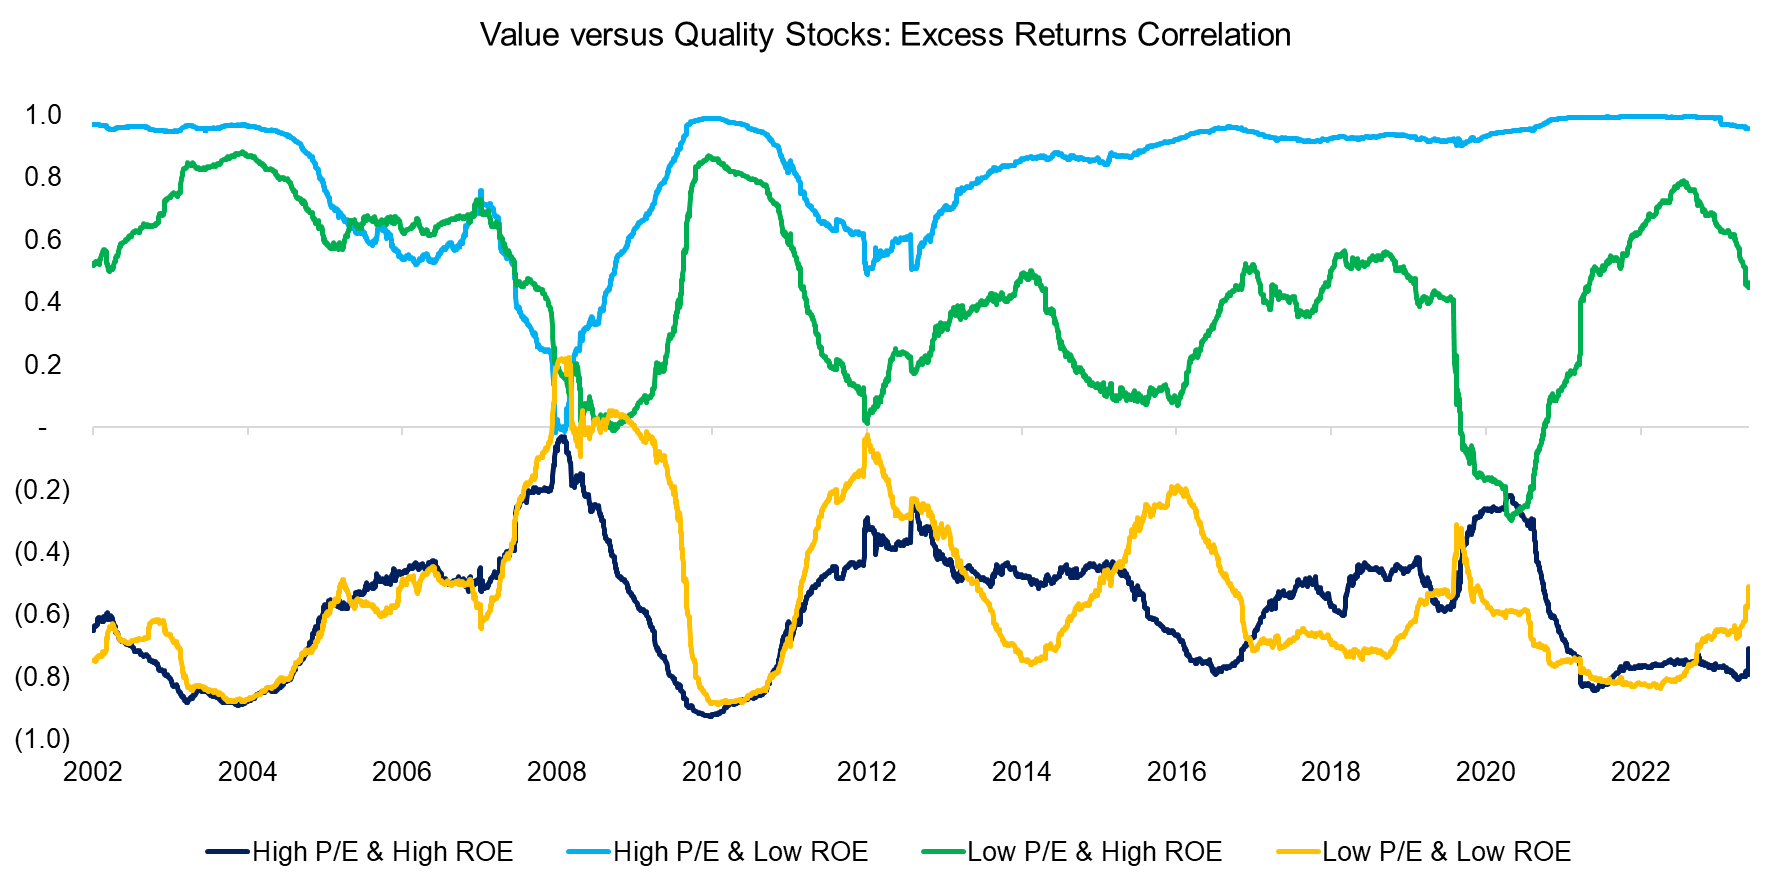 Value versus Quality Stocks Excess Returns Correlation